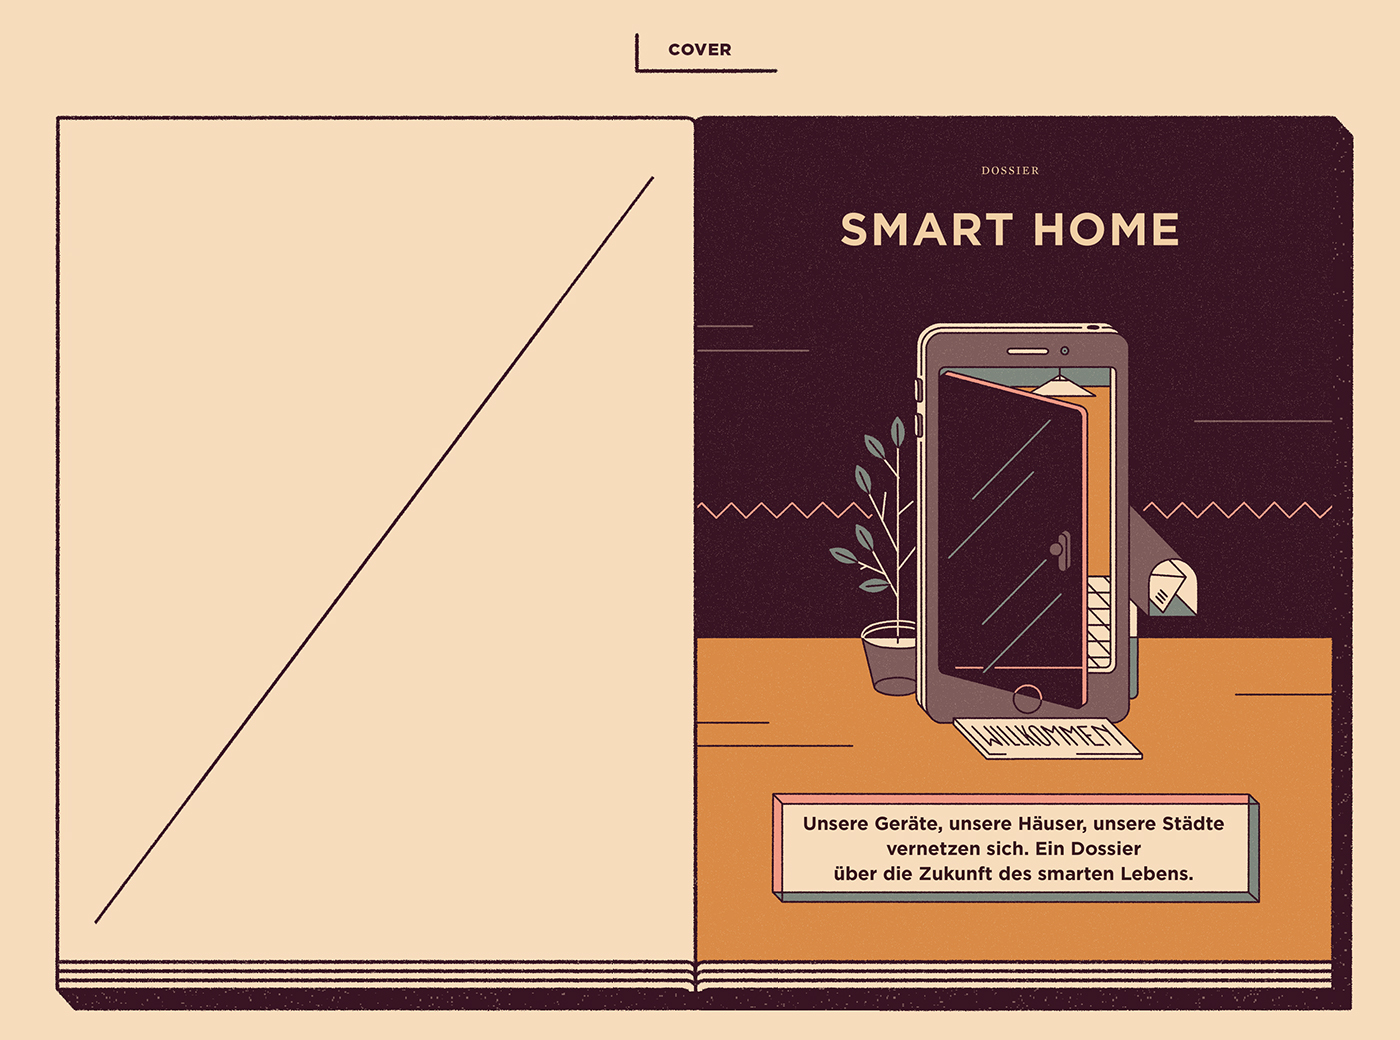 editorial design  ILLUSTRATION  kjosk Spiegel magazine hamburg Smart smarthome